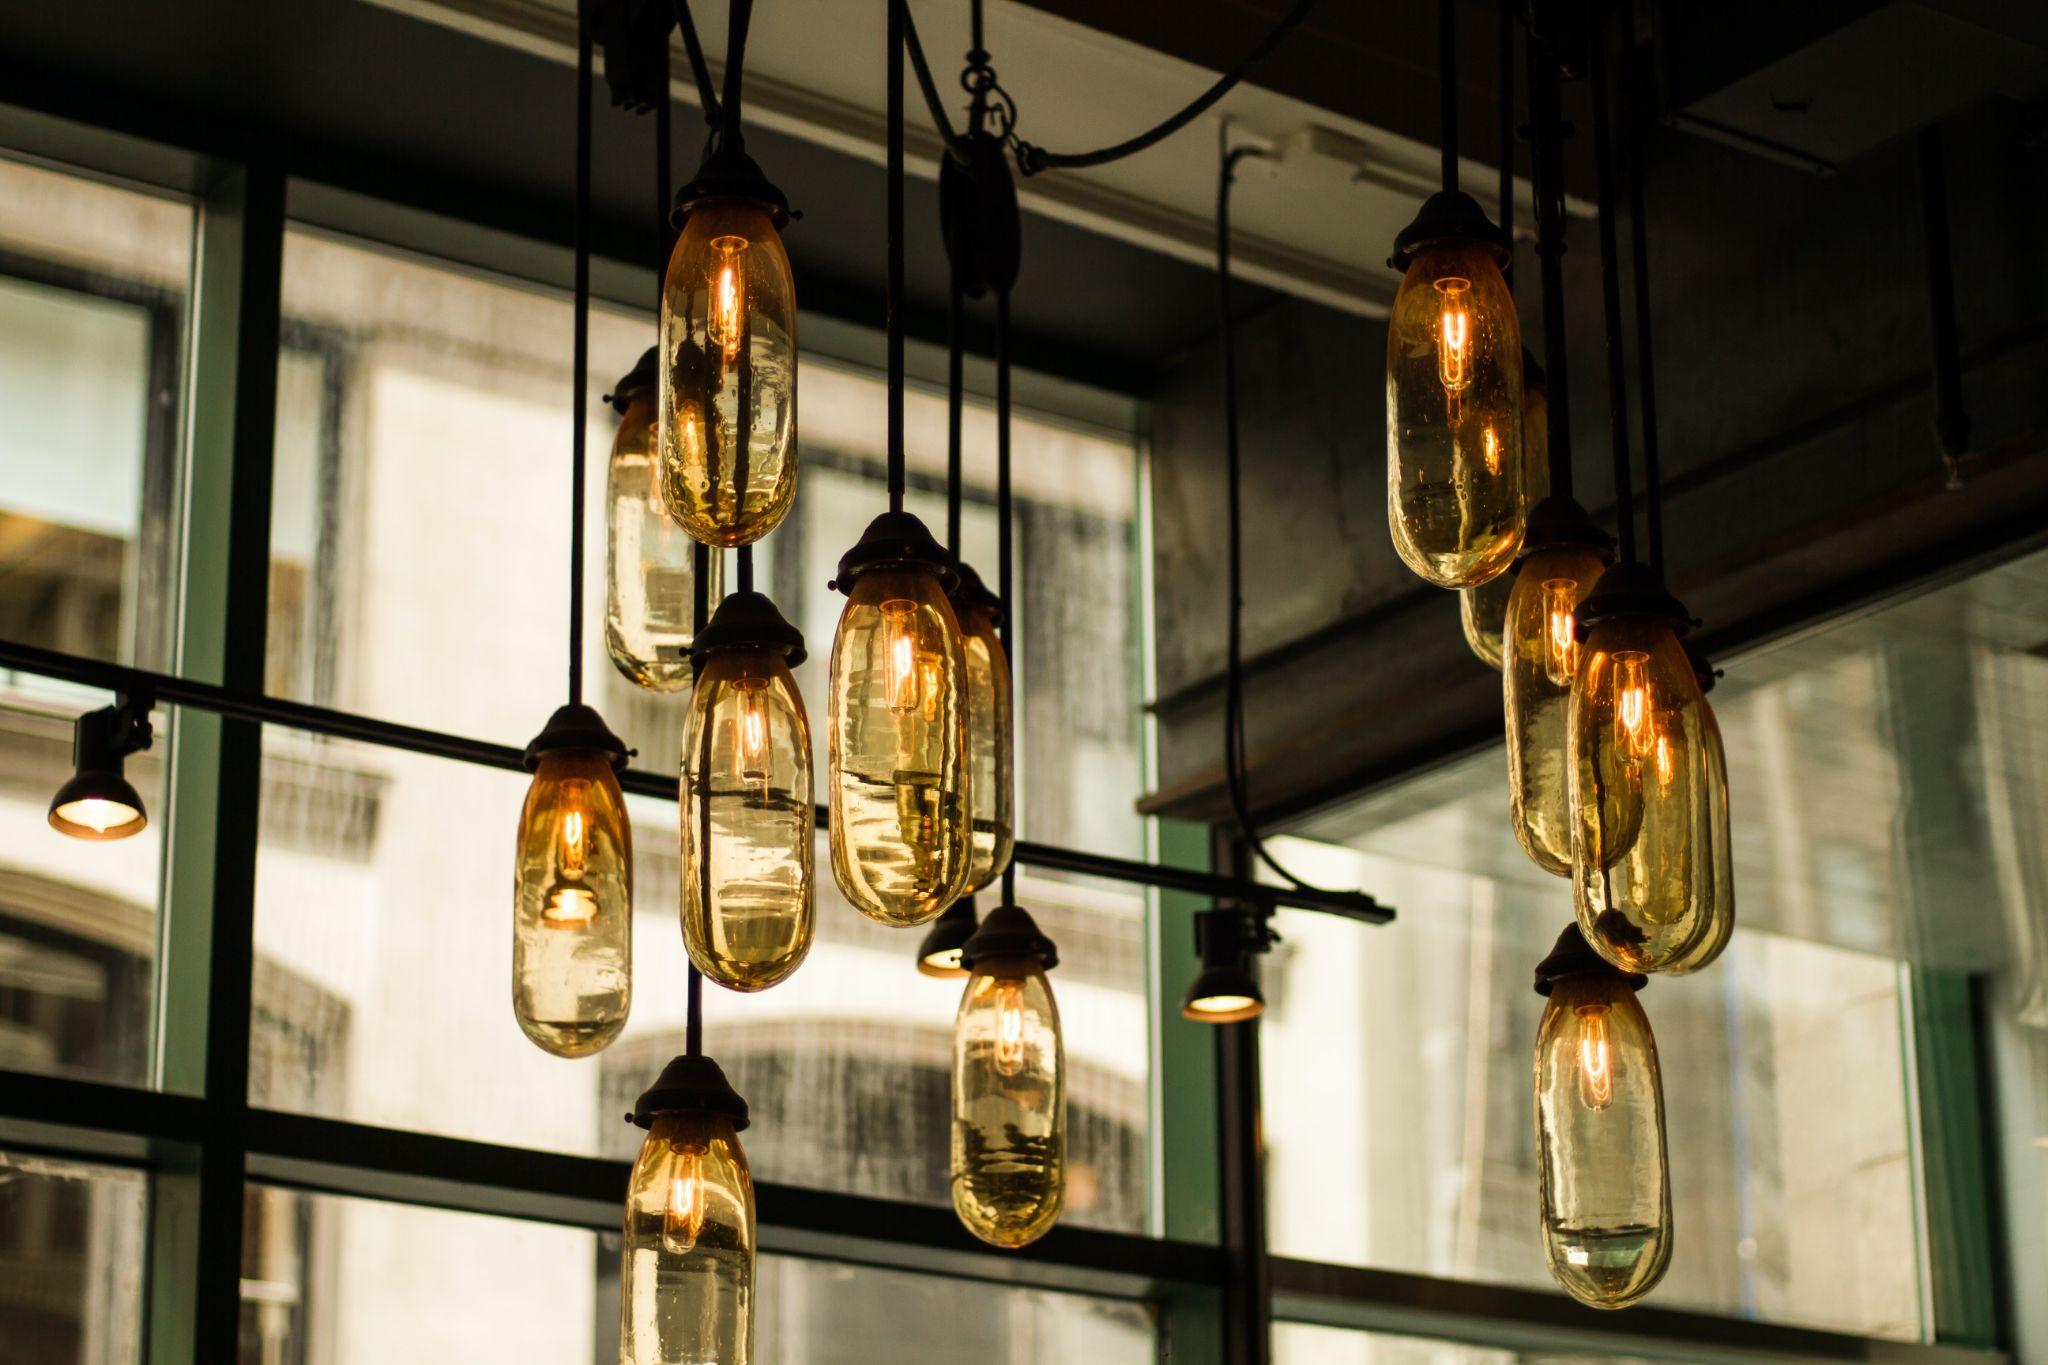 Exposed light bulbs for industrial home decor